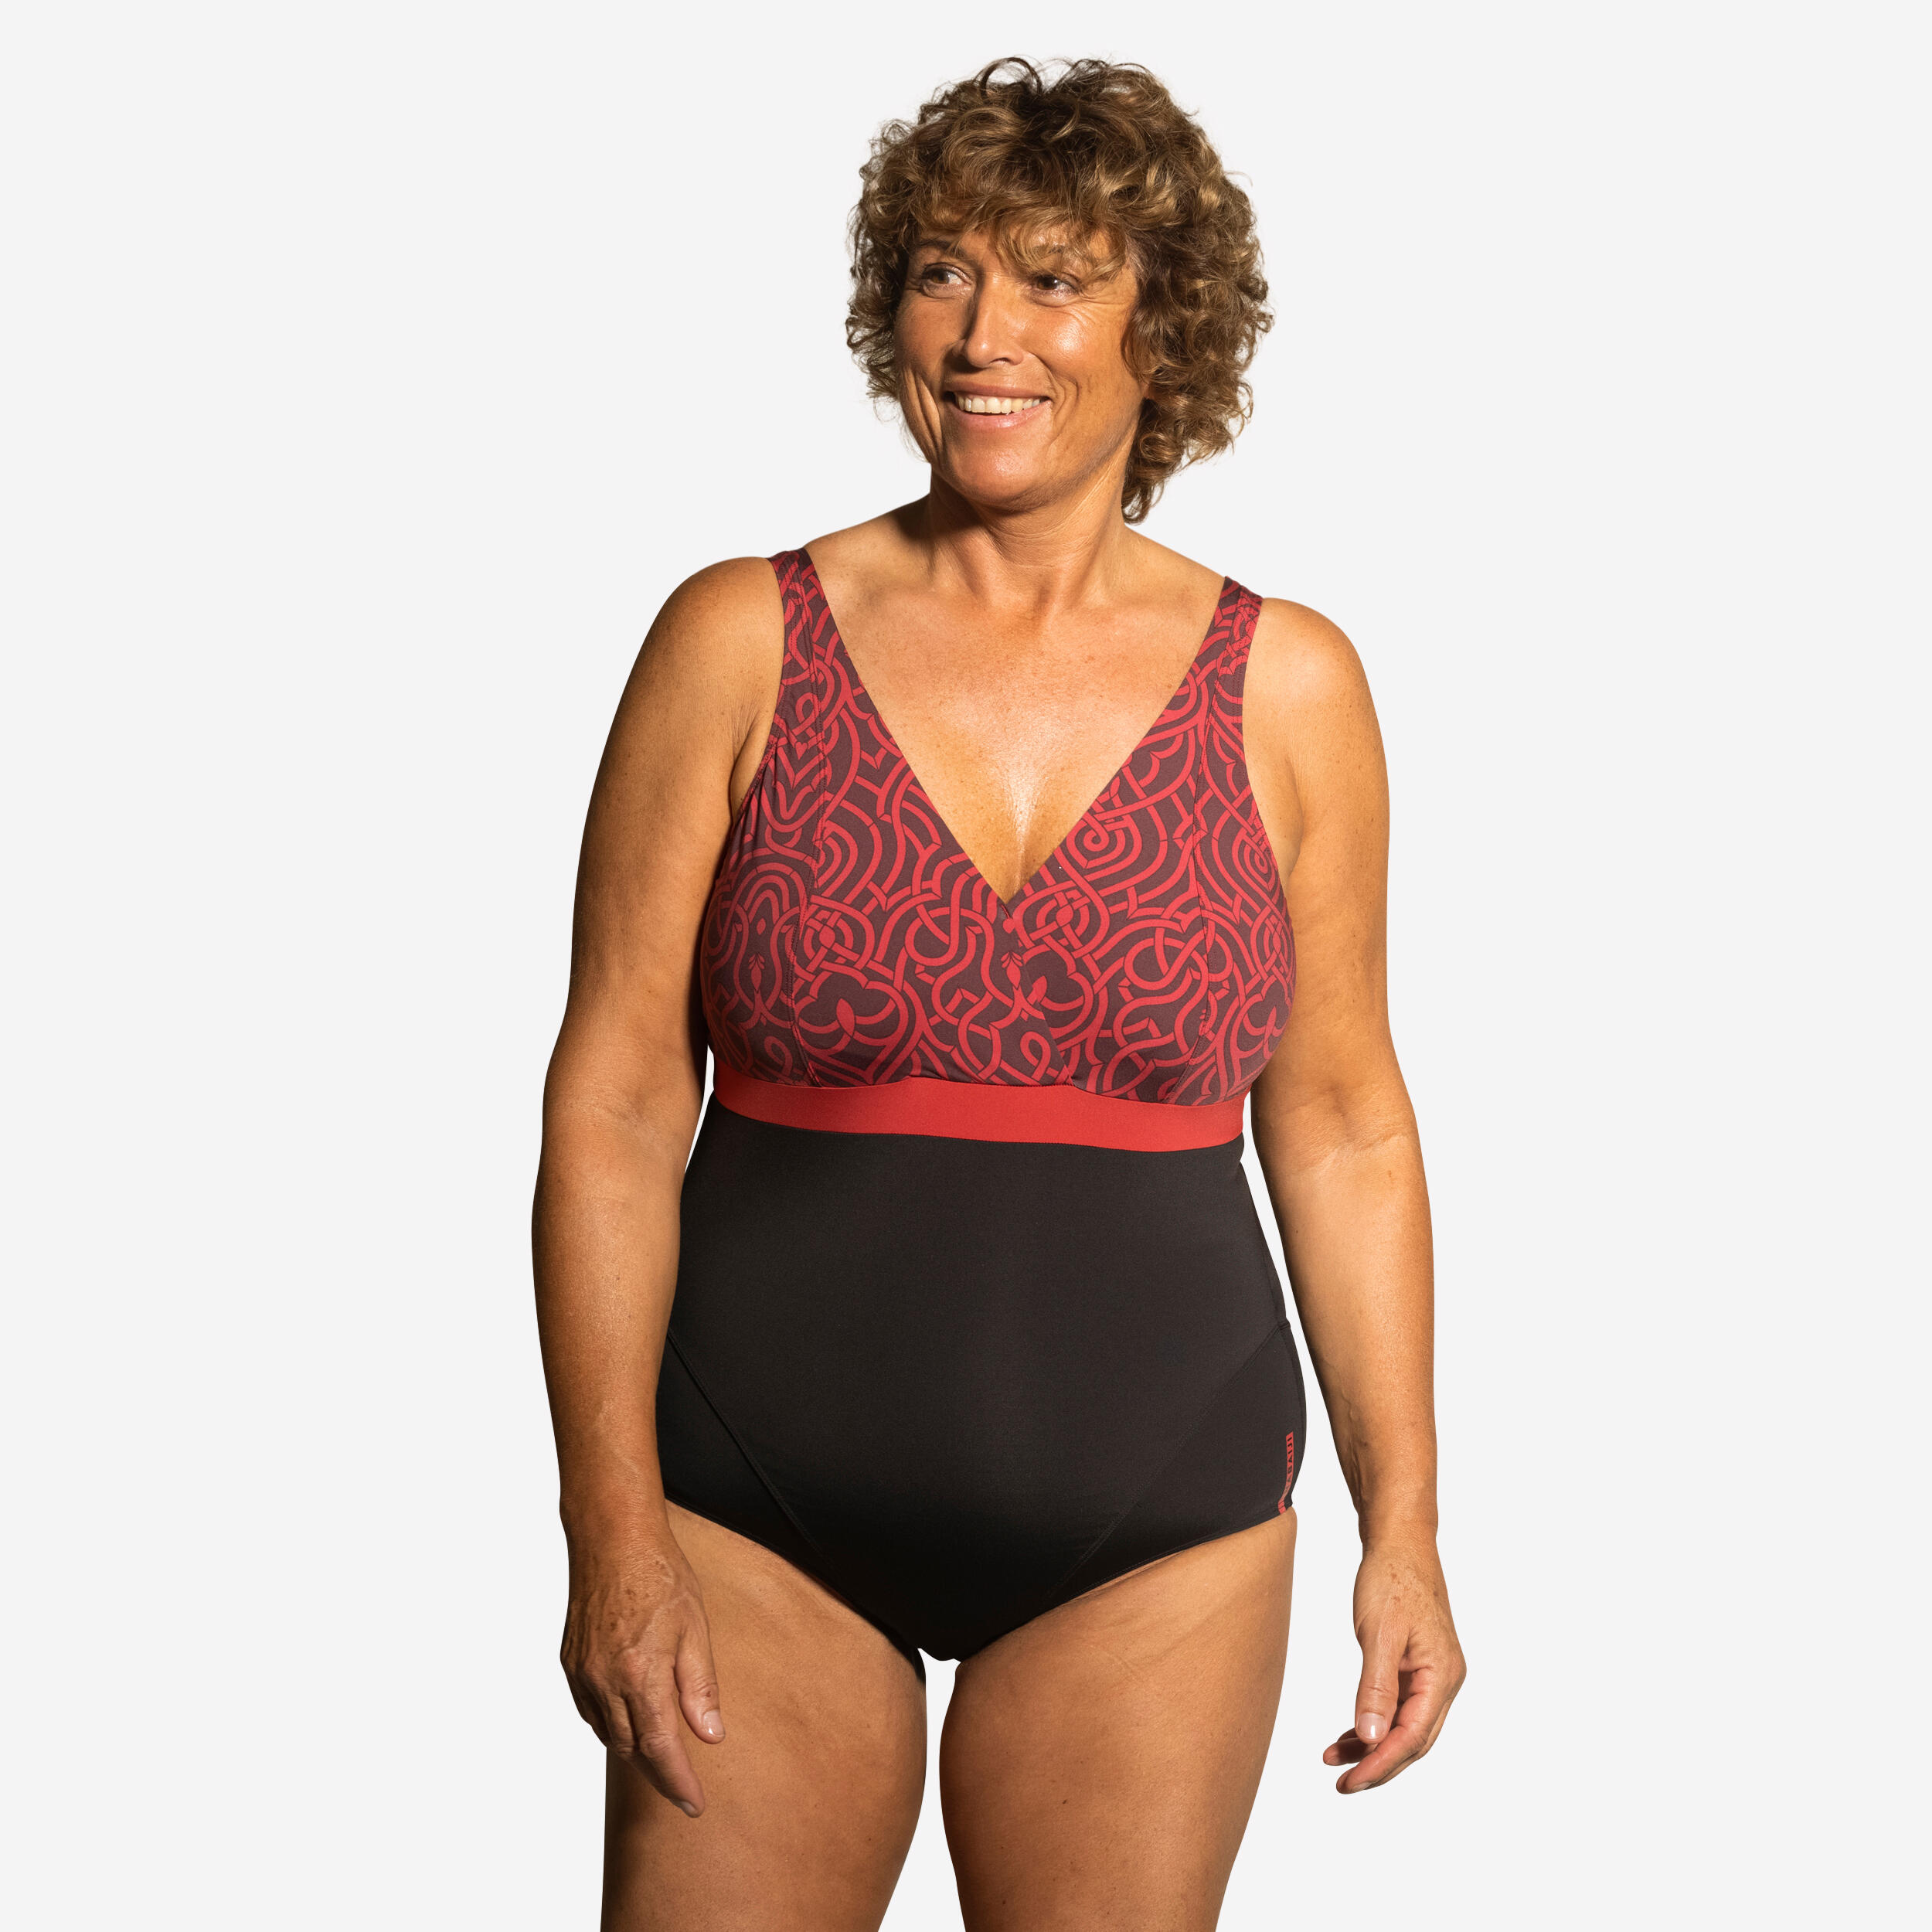 Women's 1-piece aquafitness swimsuit Cera black burgundy. Cup size D/E  NABAIJI